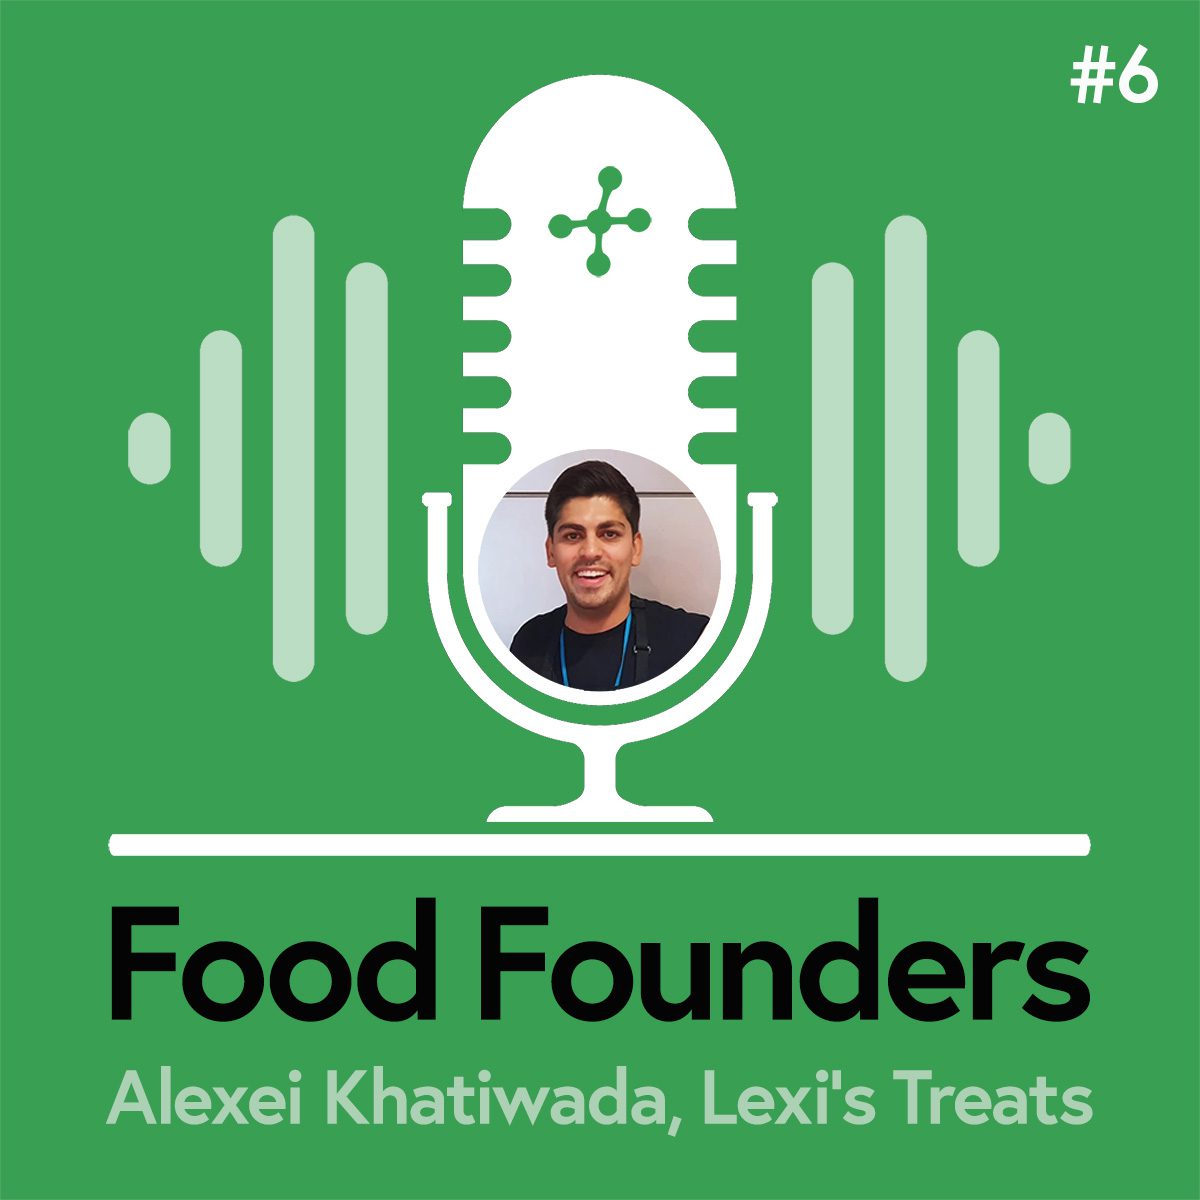 Food Founders Interviews - Alexei Khatiwada of Lexi's Treats